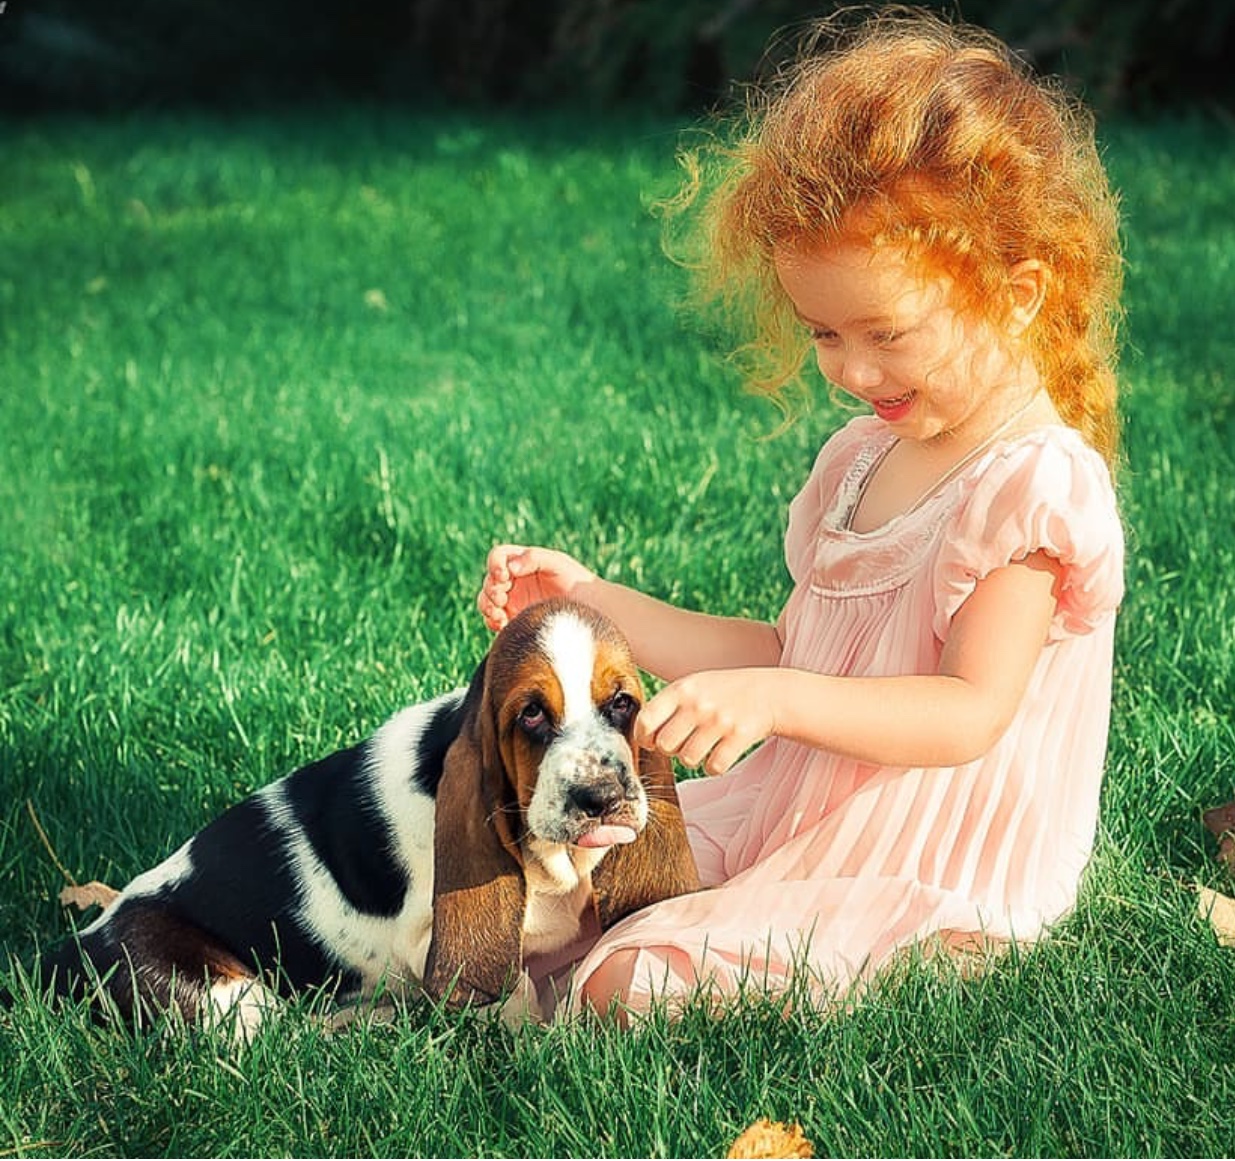 Basset Hound puppy sitting on the grass with a kid